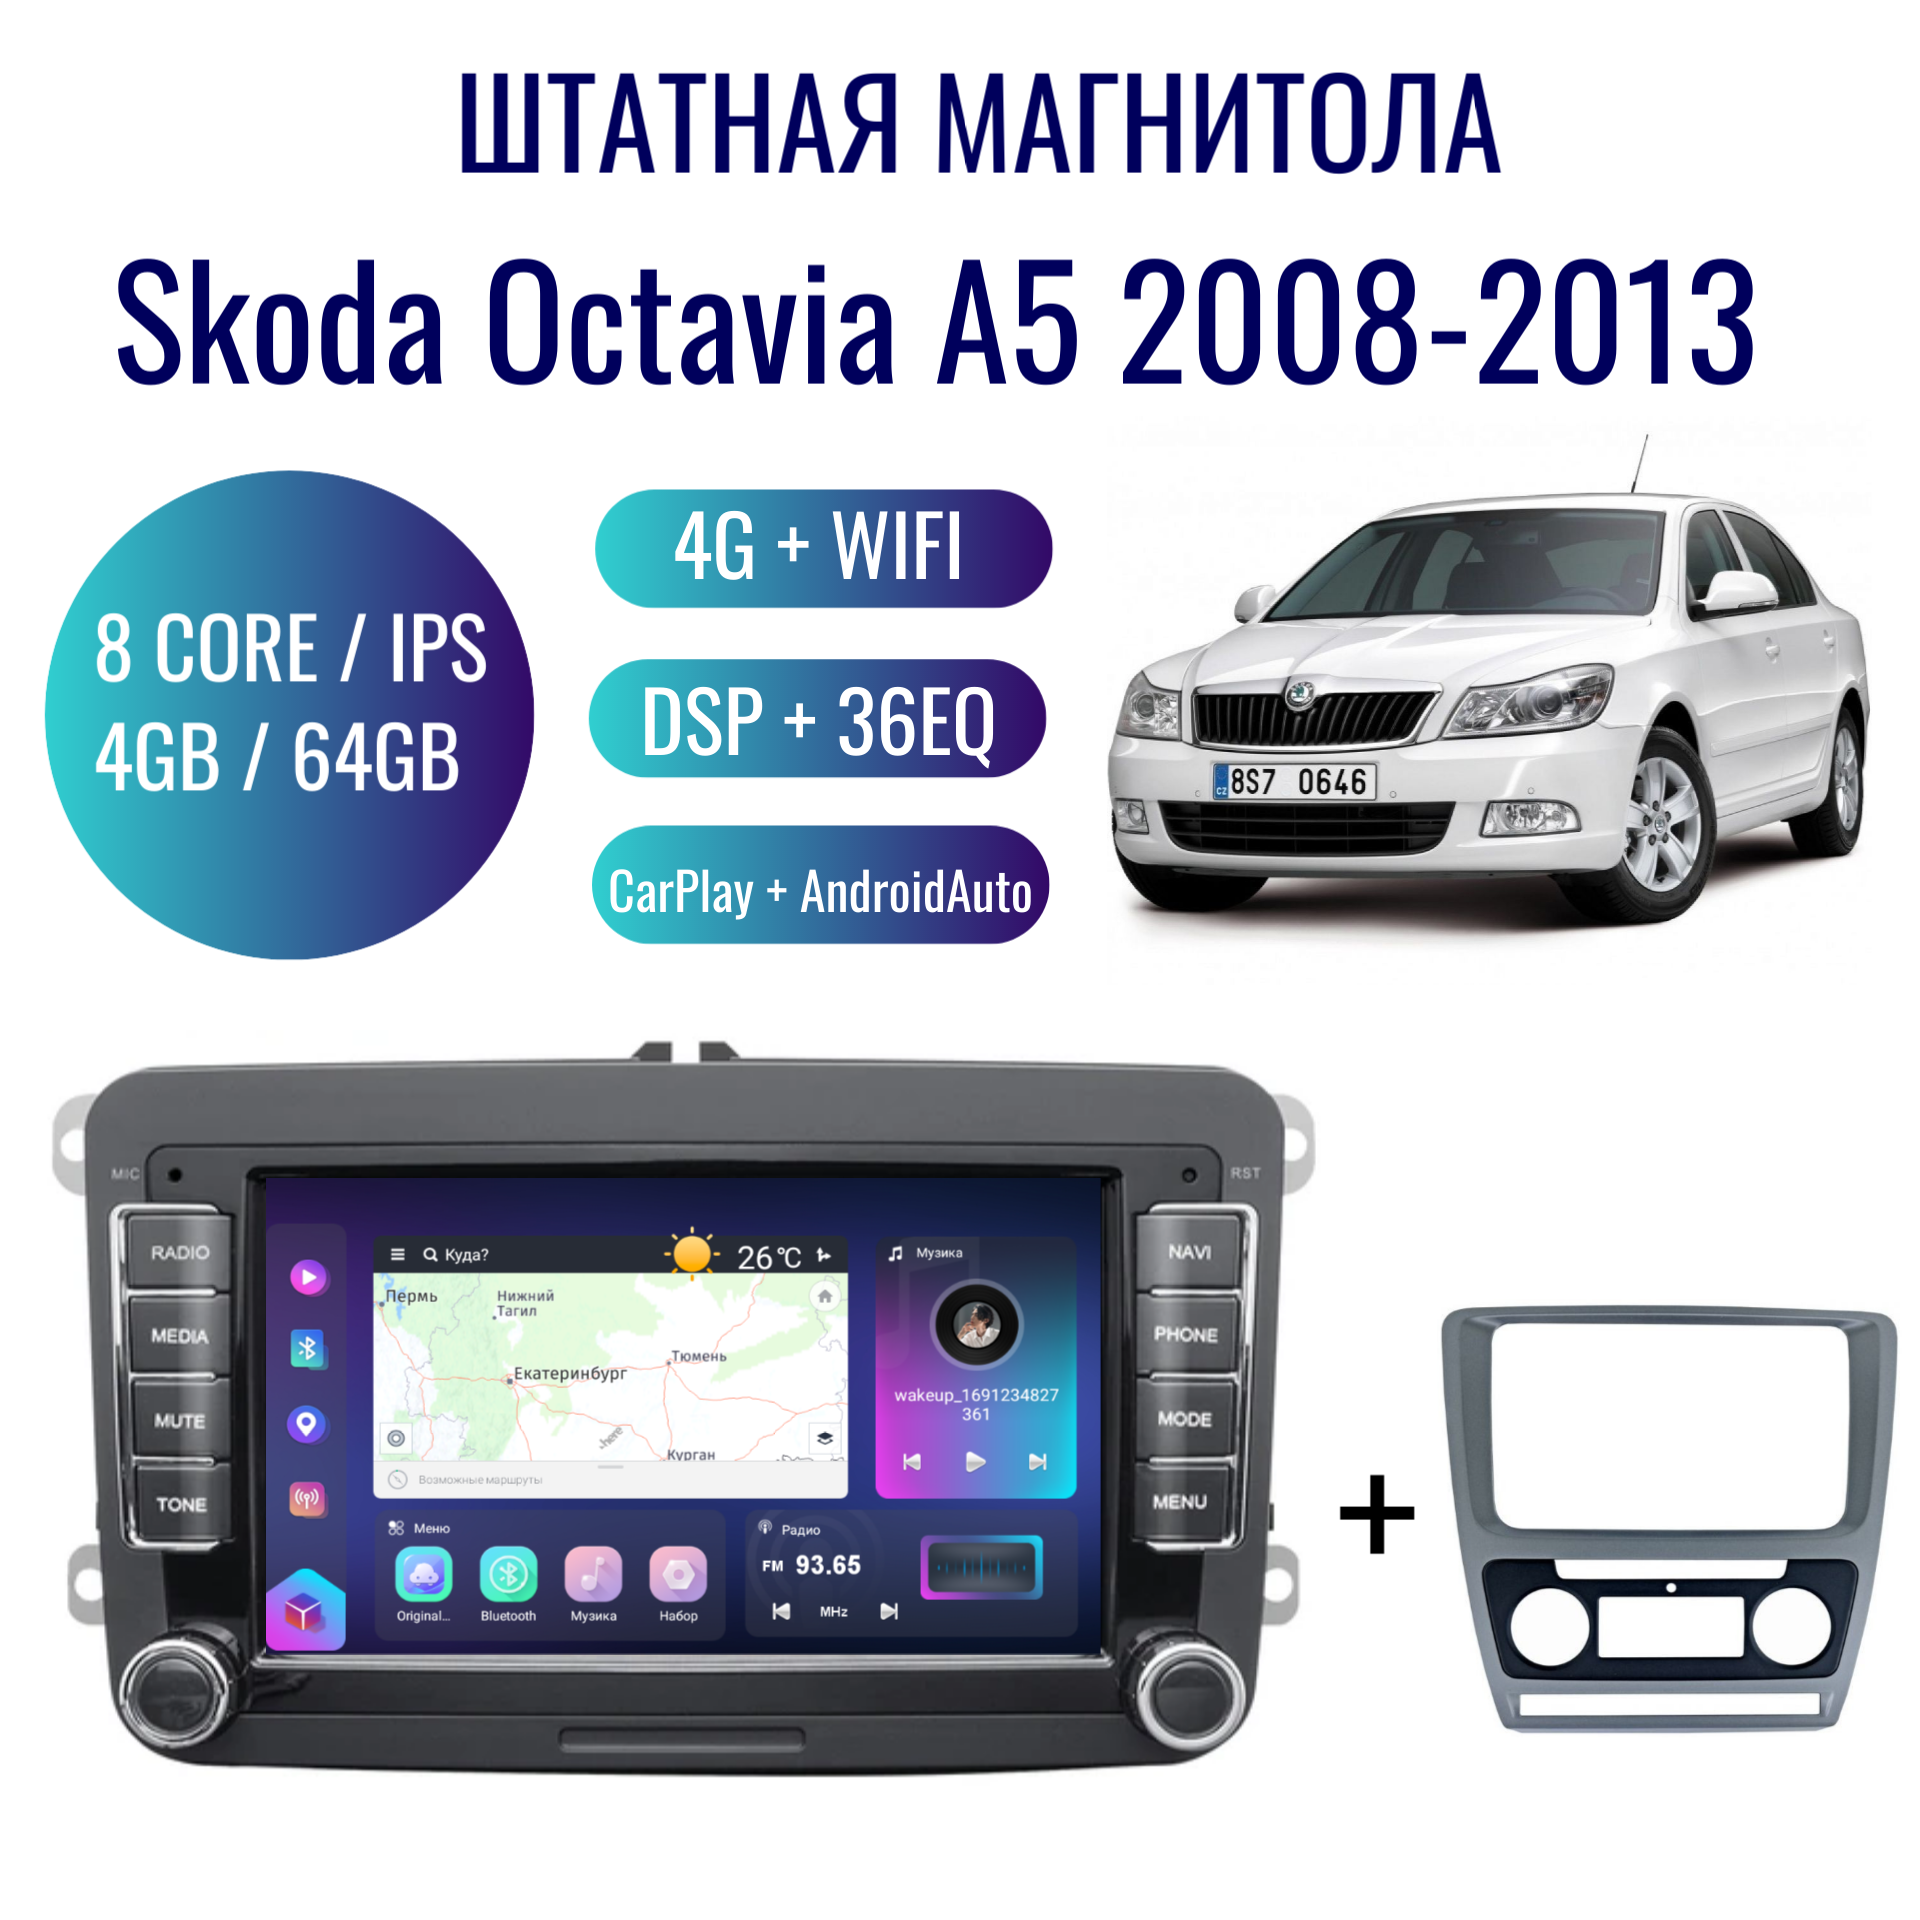 Штатная магнитола для Skoda Octavia на Android (4/64, 8 ядер, GPS, WIFI, CarPlay, Android Auto, DSP, 36EQ, навигатор)